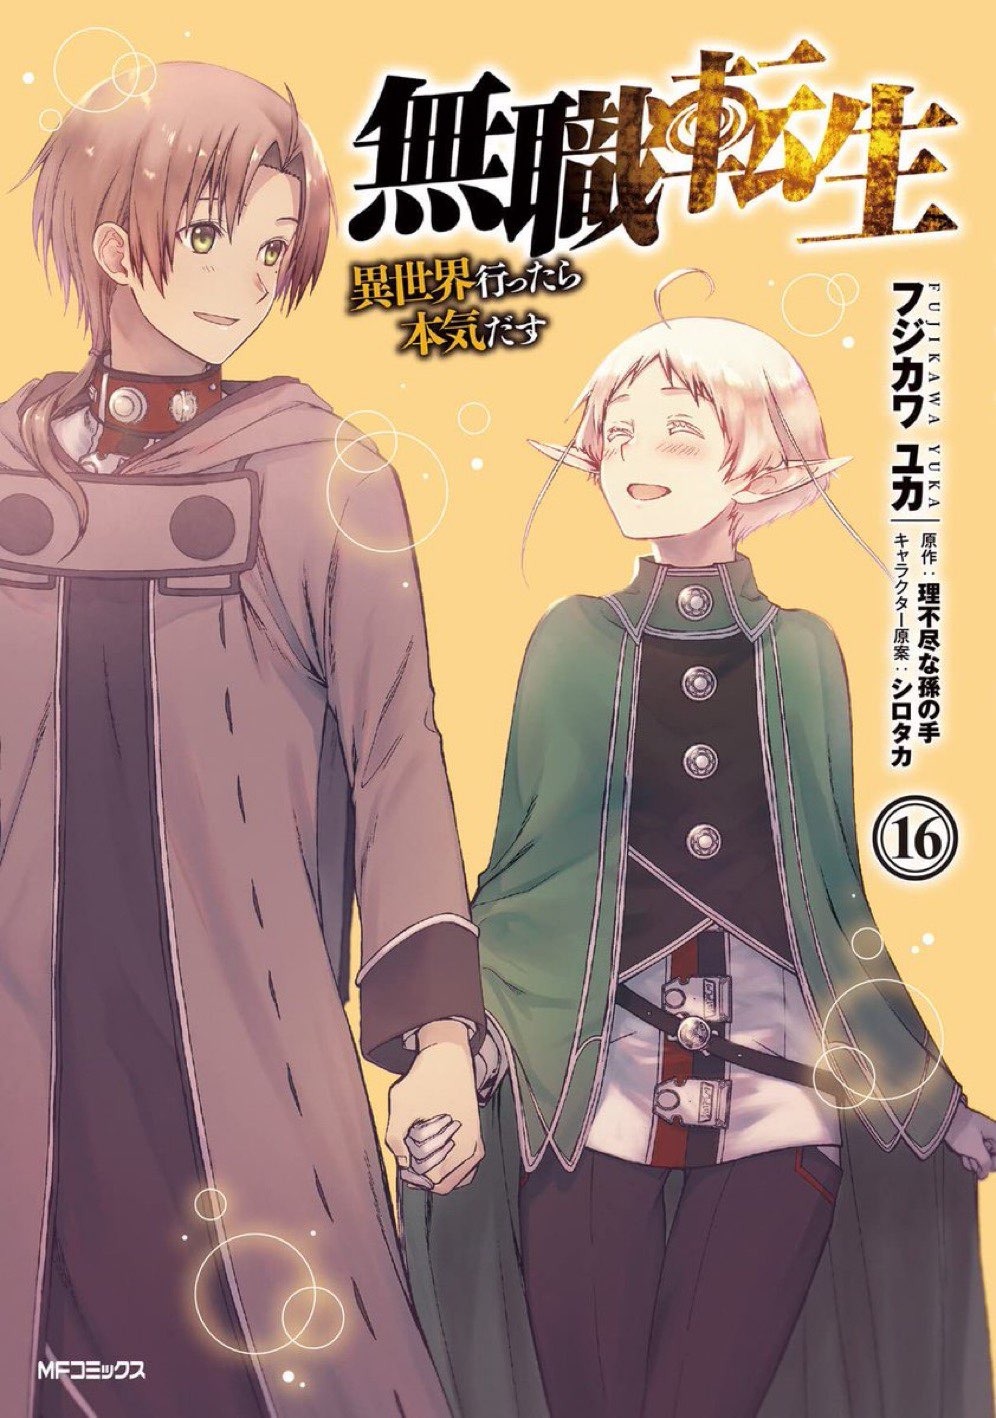 Mushoku Tensei Anime VS Manga VS Light Novel 